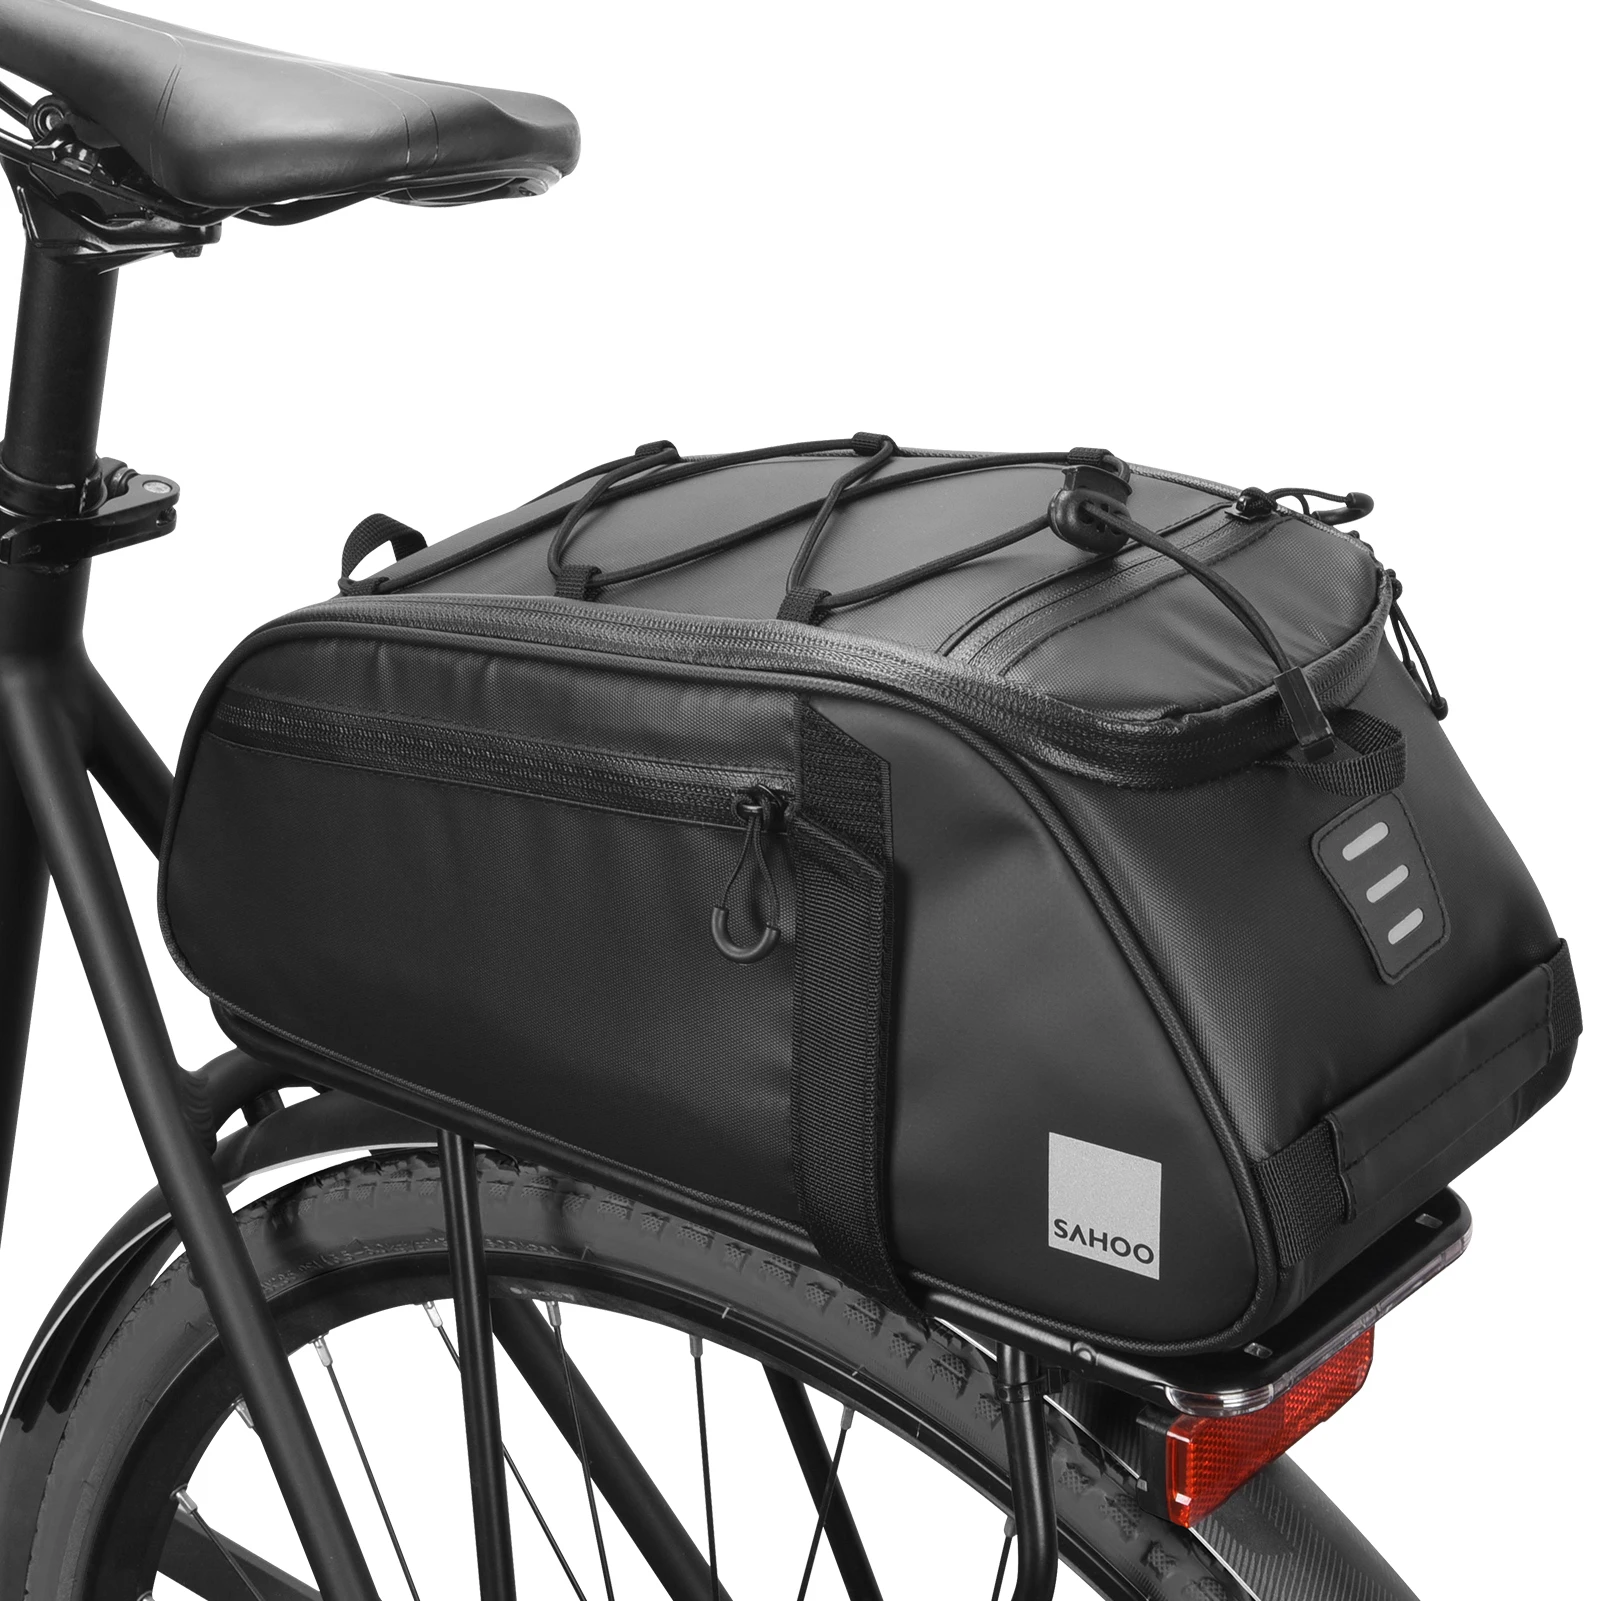 Bicycle Bike Rear Rack Seat Pouch Bag Trunk Cycling Saddle Tail Storage Pannier